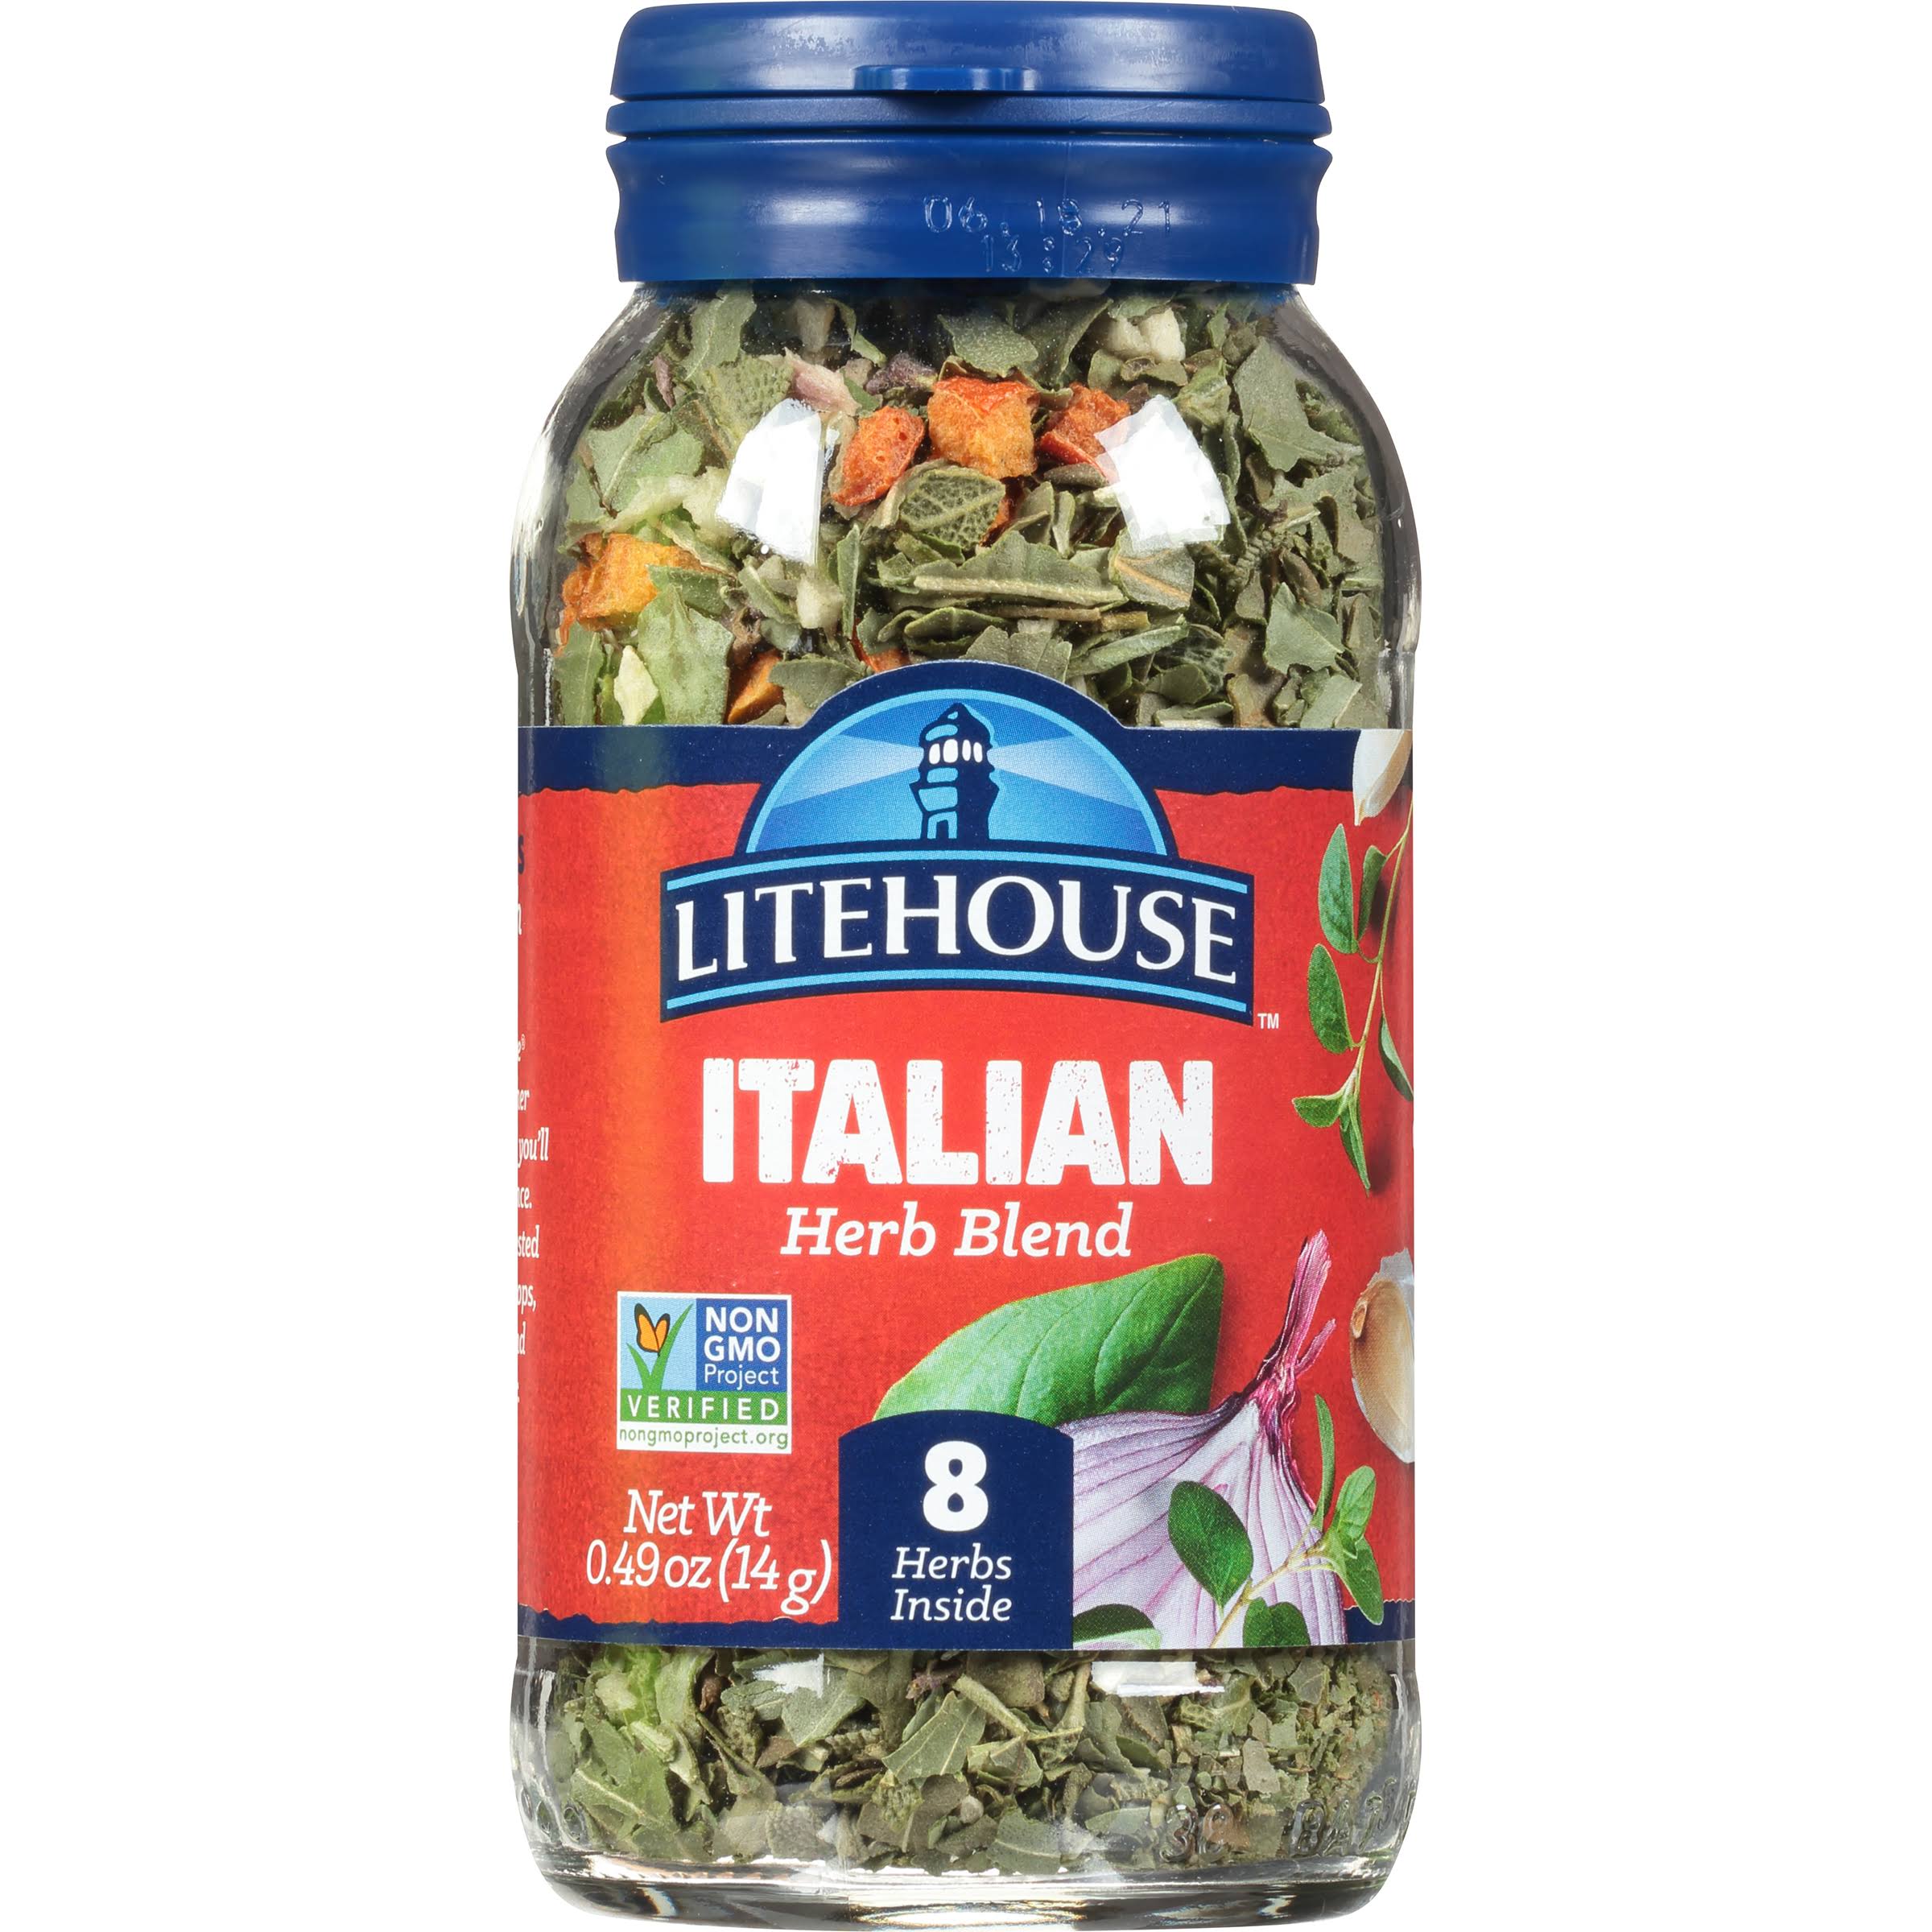 Litehouse Herb Blend, 8 Herbs, Italian - 0.49 oz